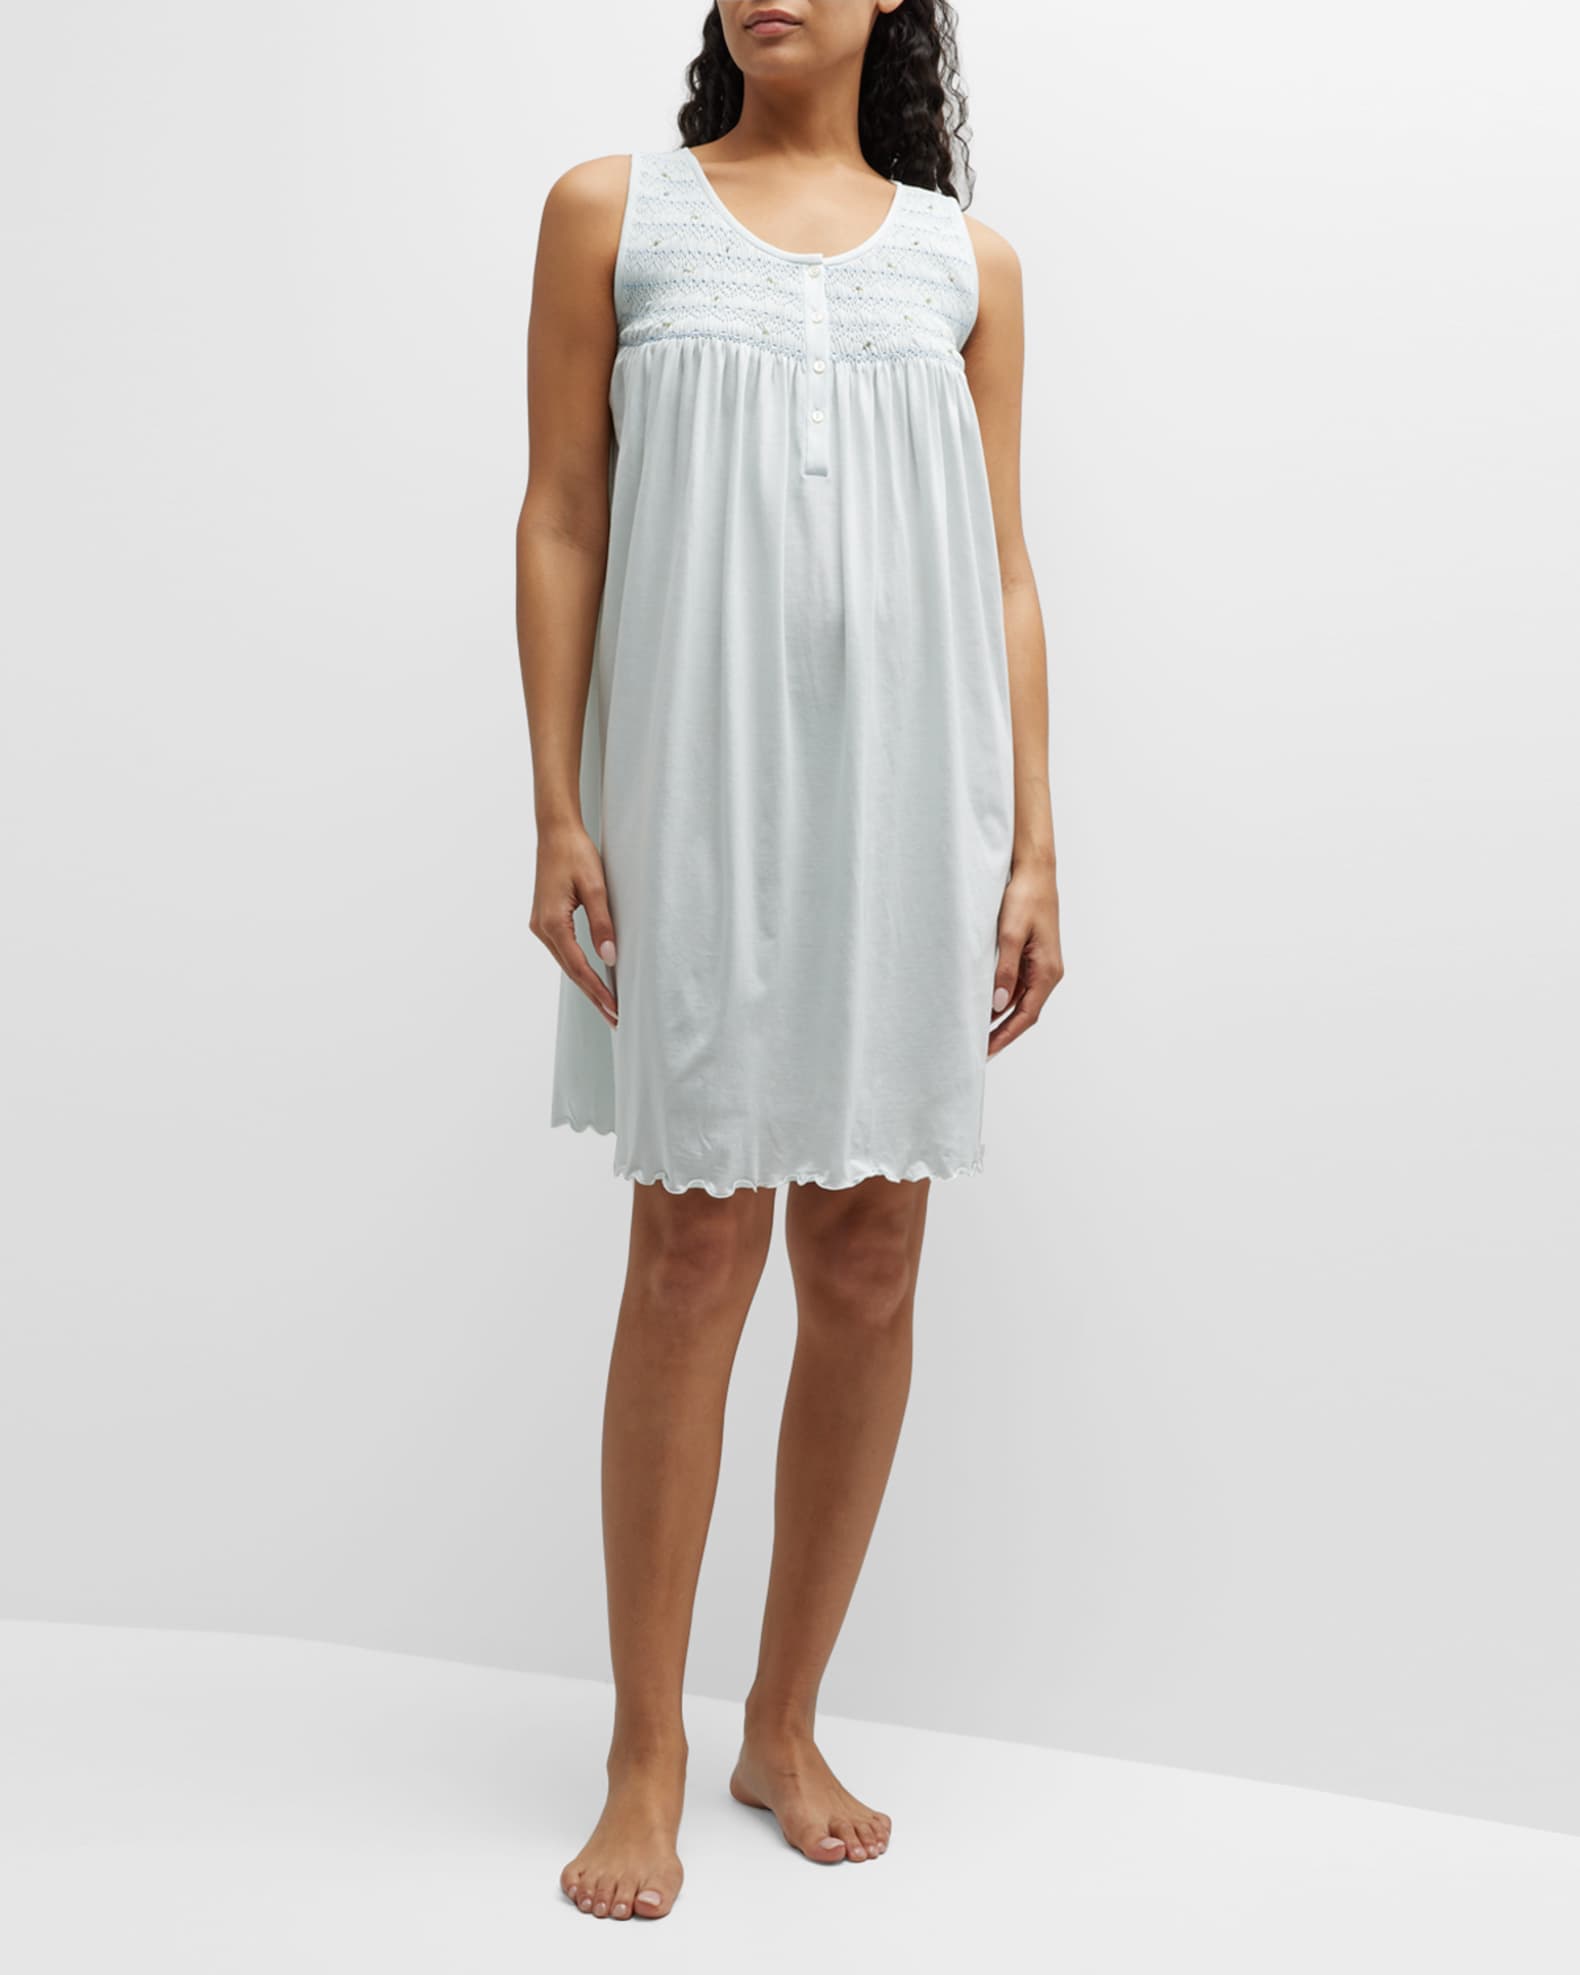 P Jamas Catalina Sleeveless Smocked Cotton Nightgown | Neiman Marcus